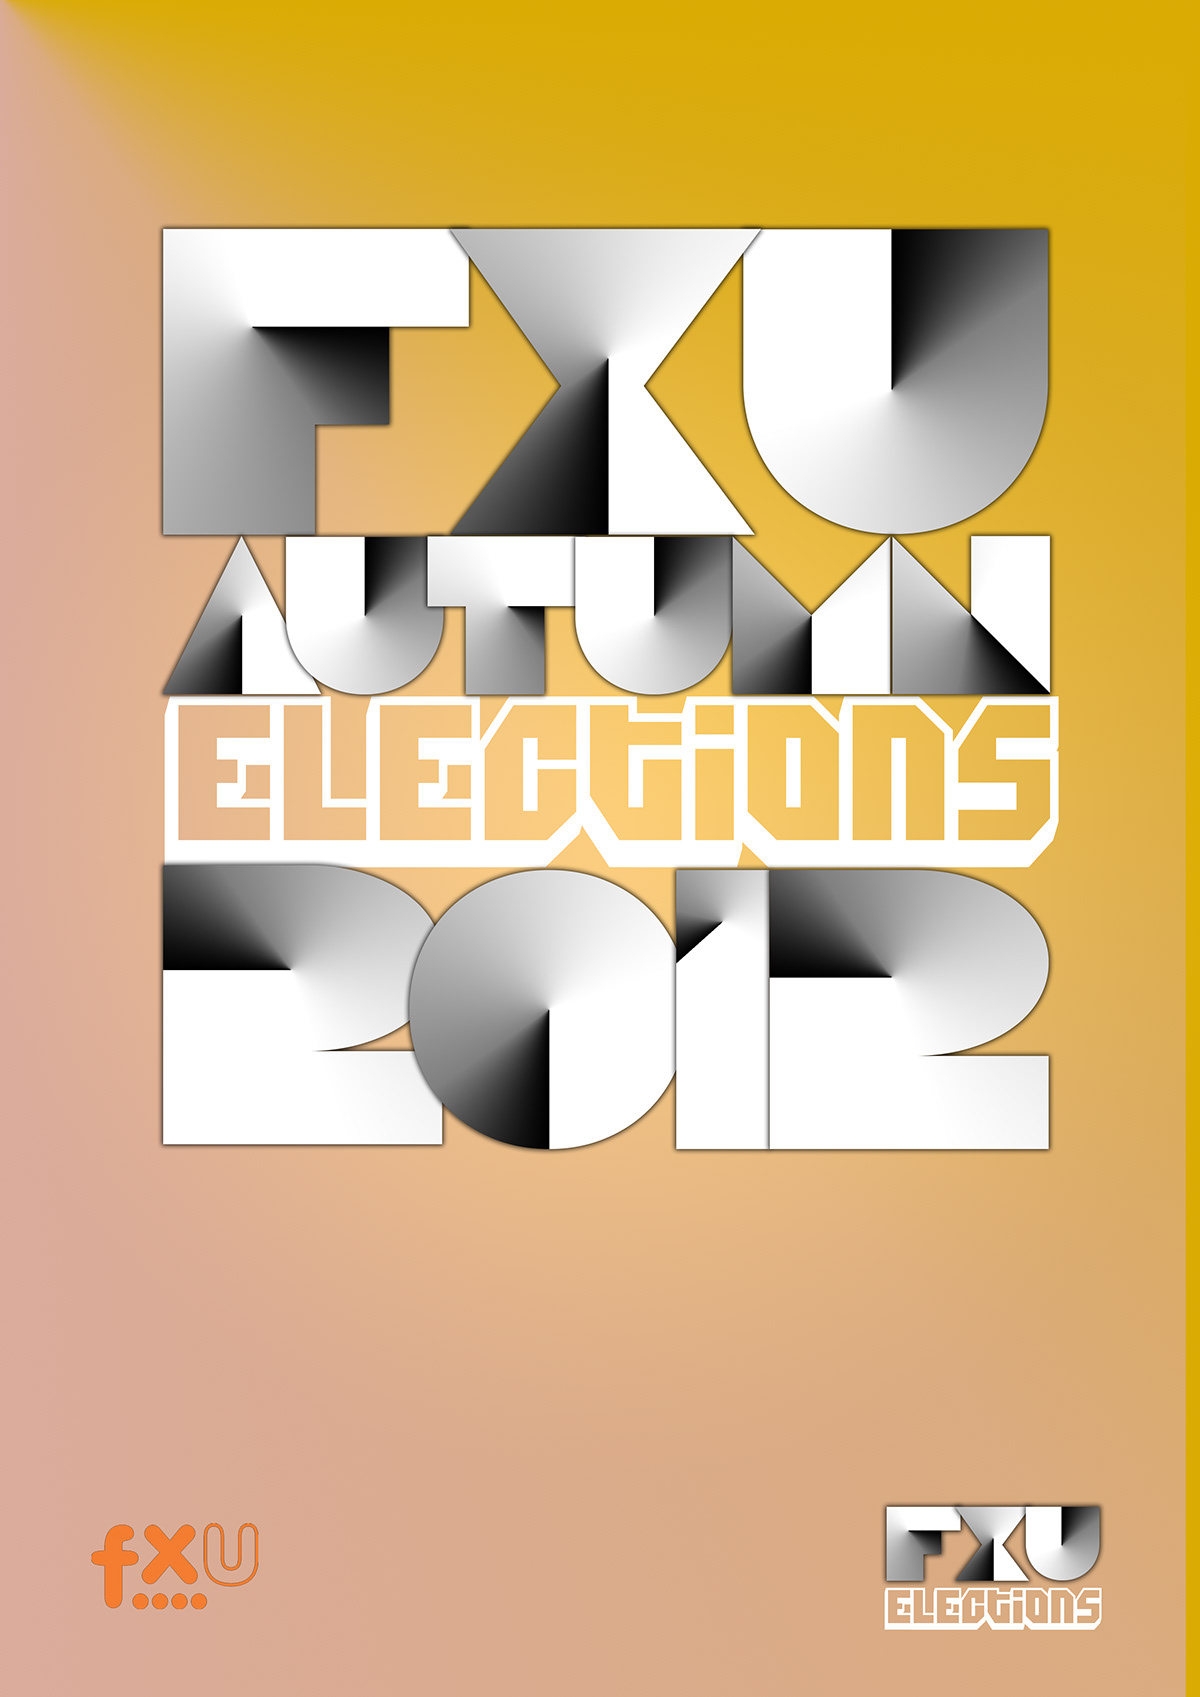 fxu Autumn Elections